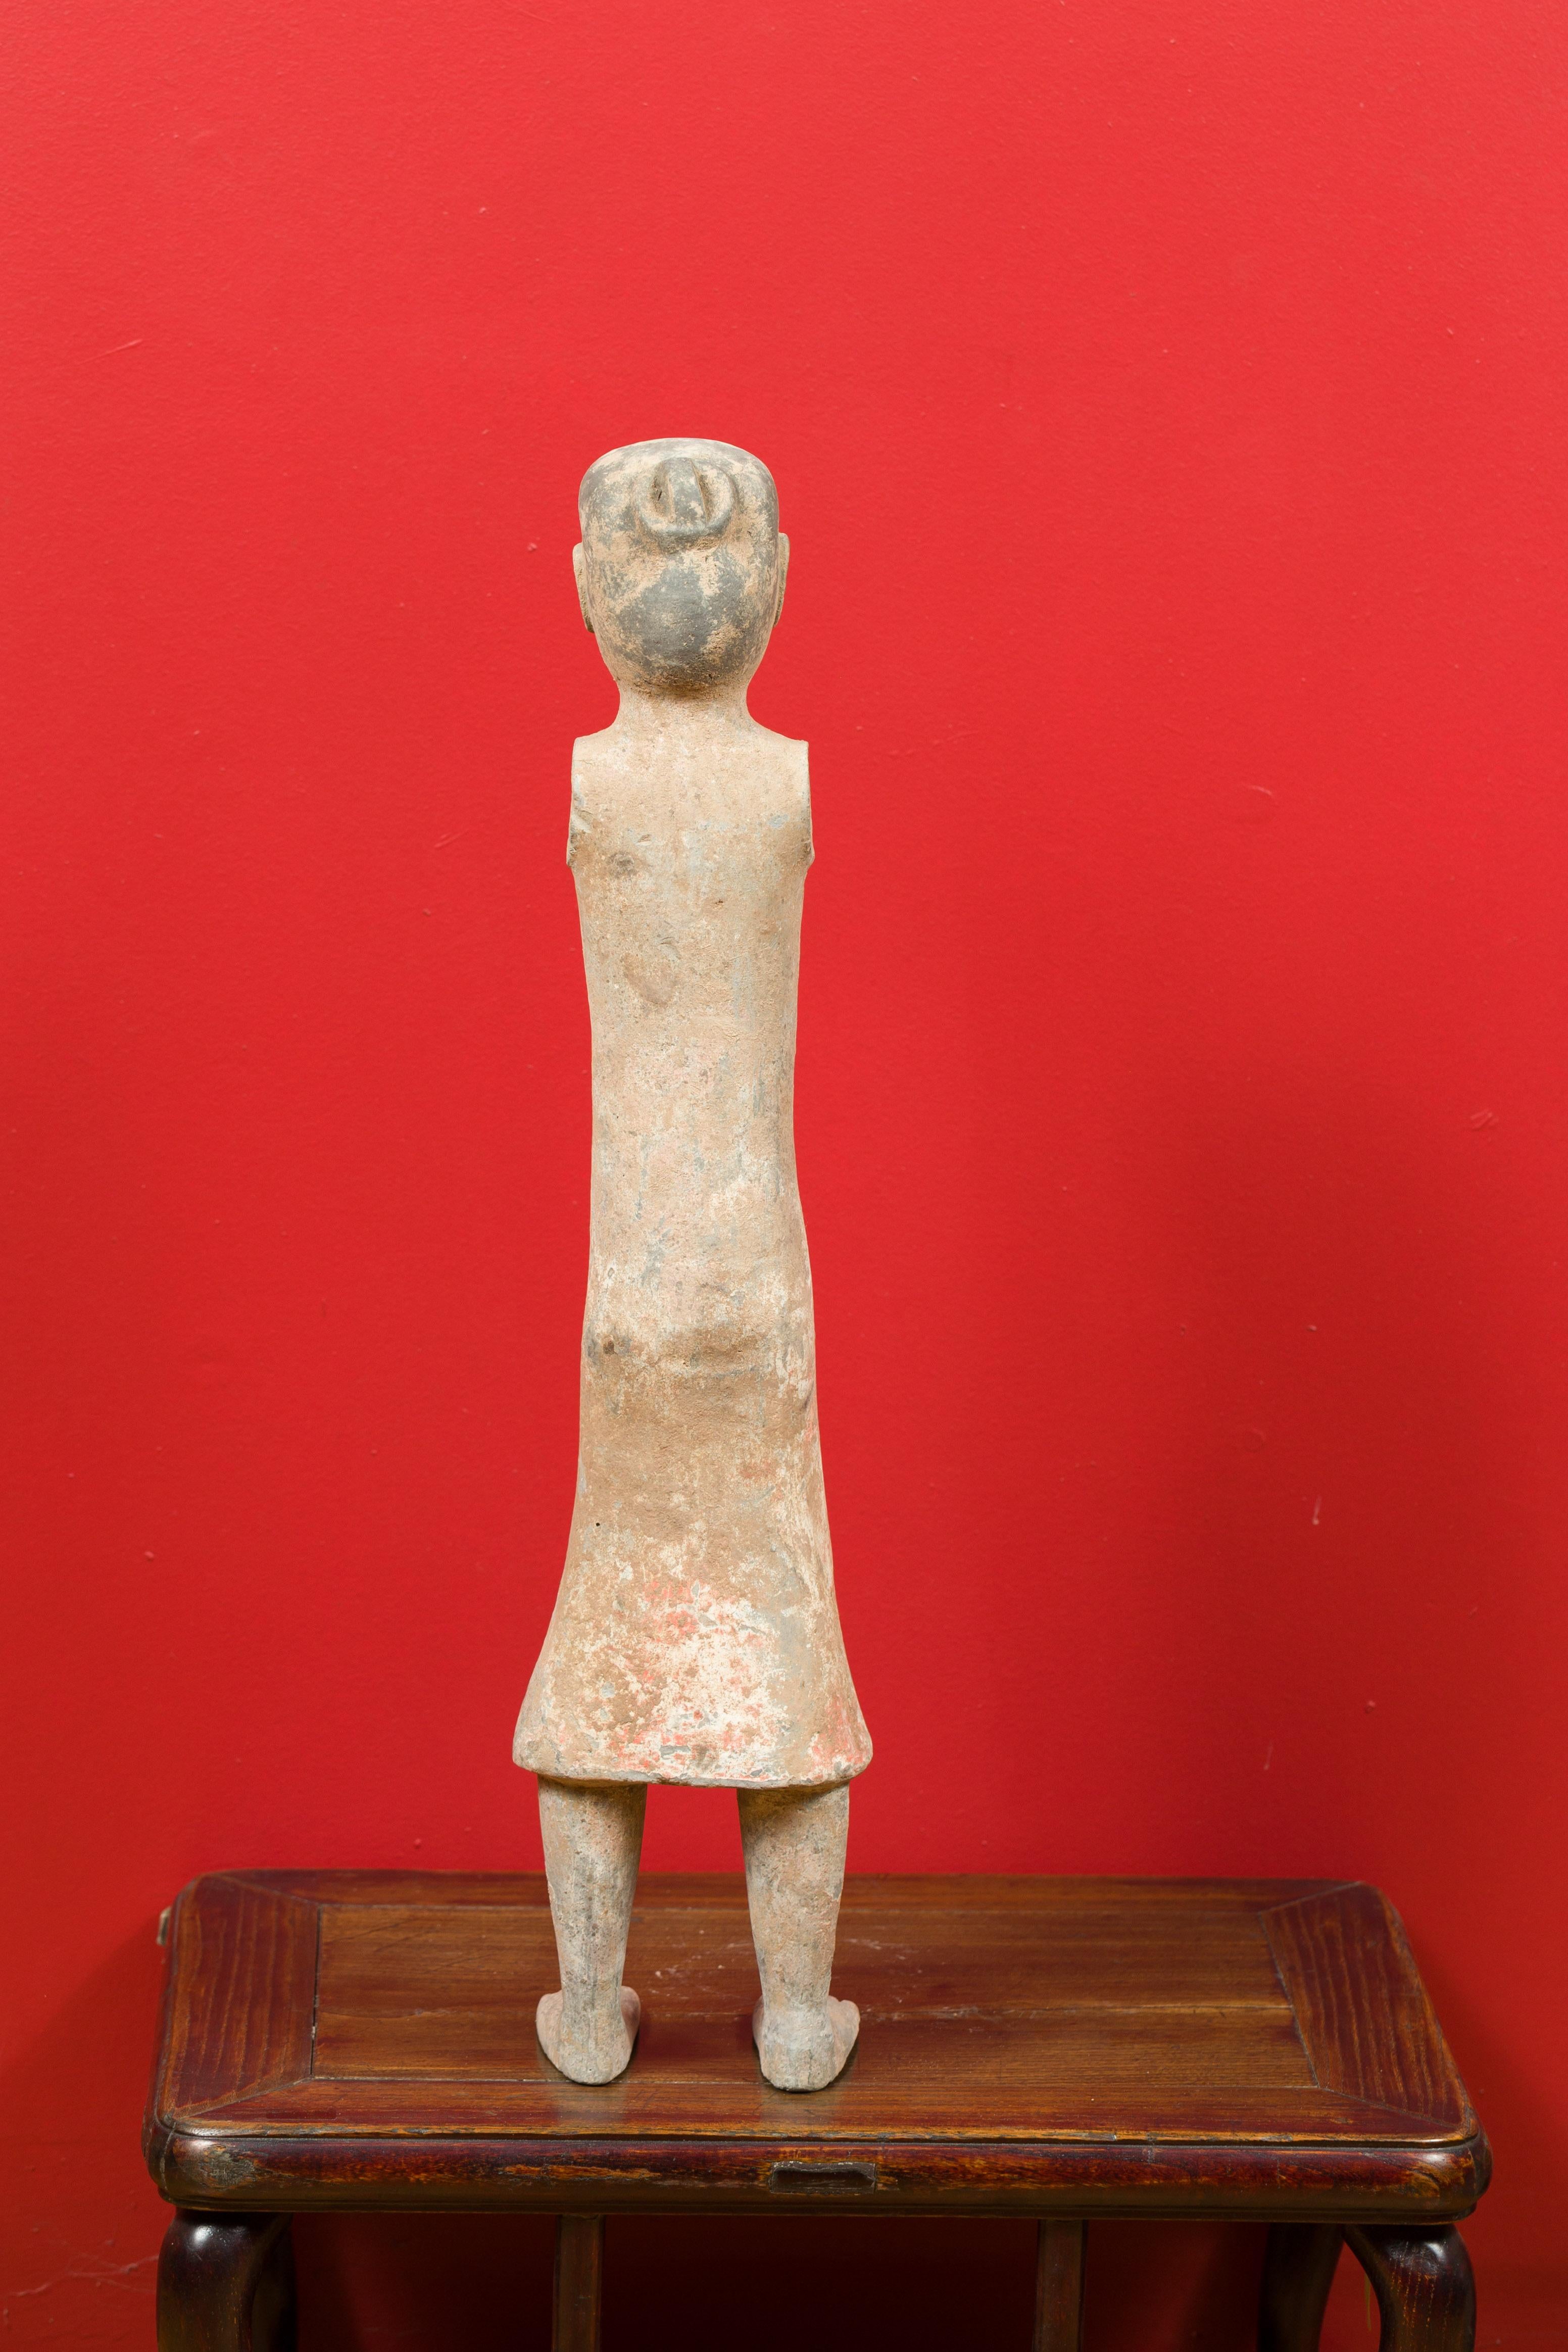 Terracotta Western Han Dynasty 206 BC-24 AD Chinese Figurine with Original Polychromy